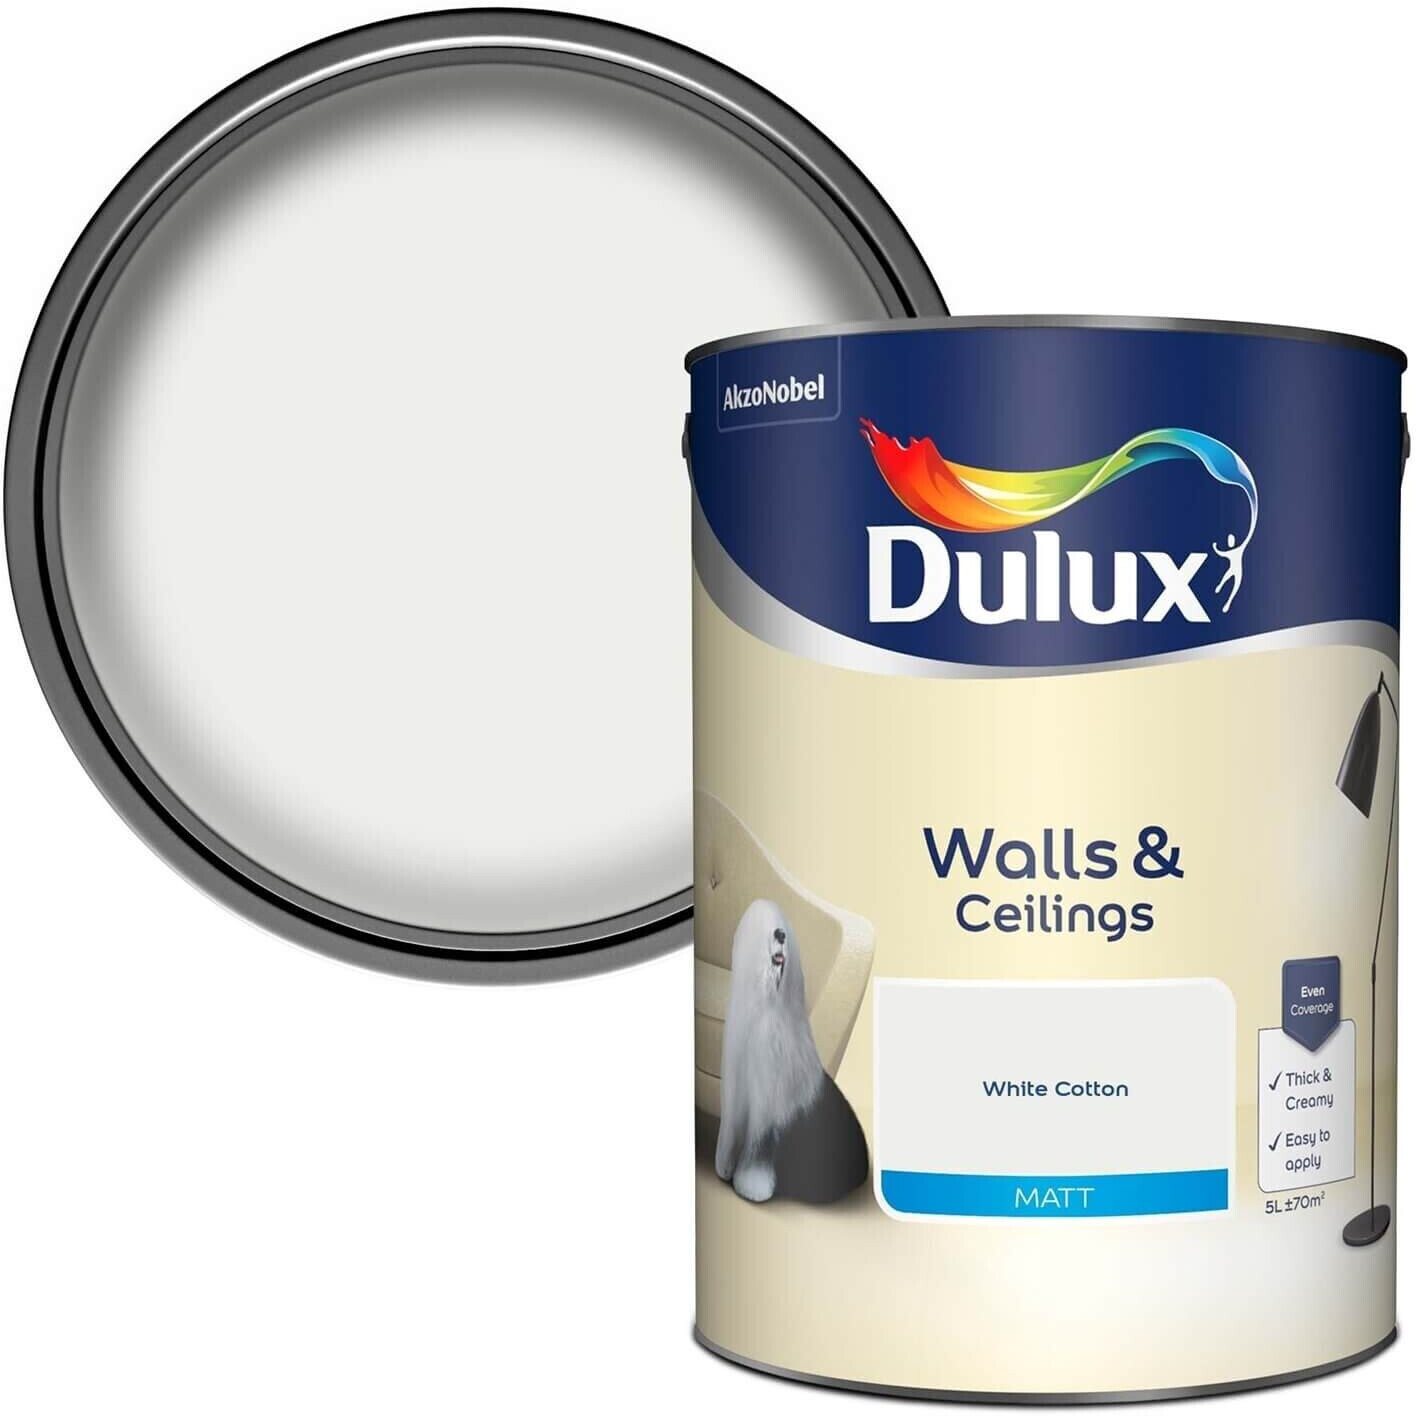 Buy Dulux White Cotton - Matt Emulsion Paint - 5L from £26.00 (Today